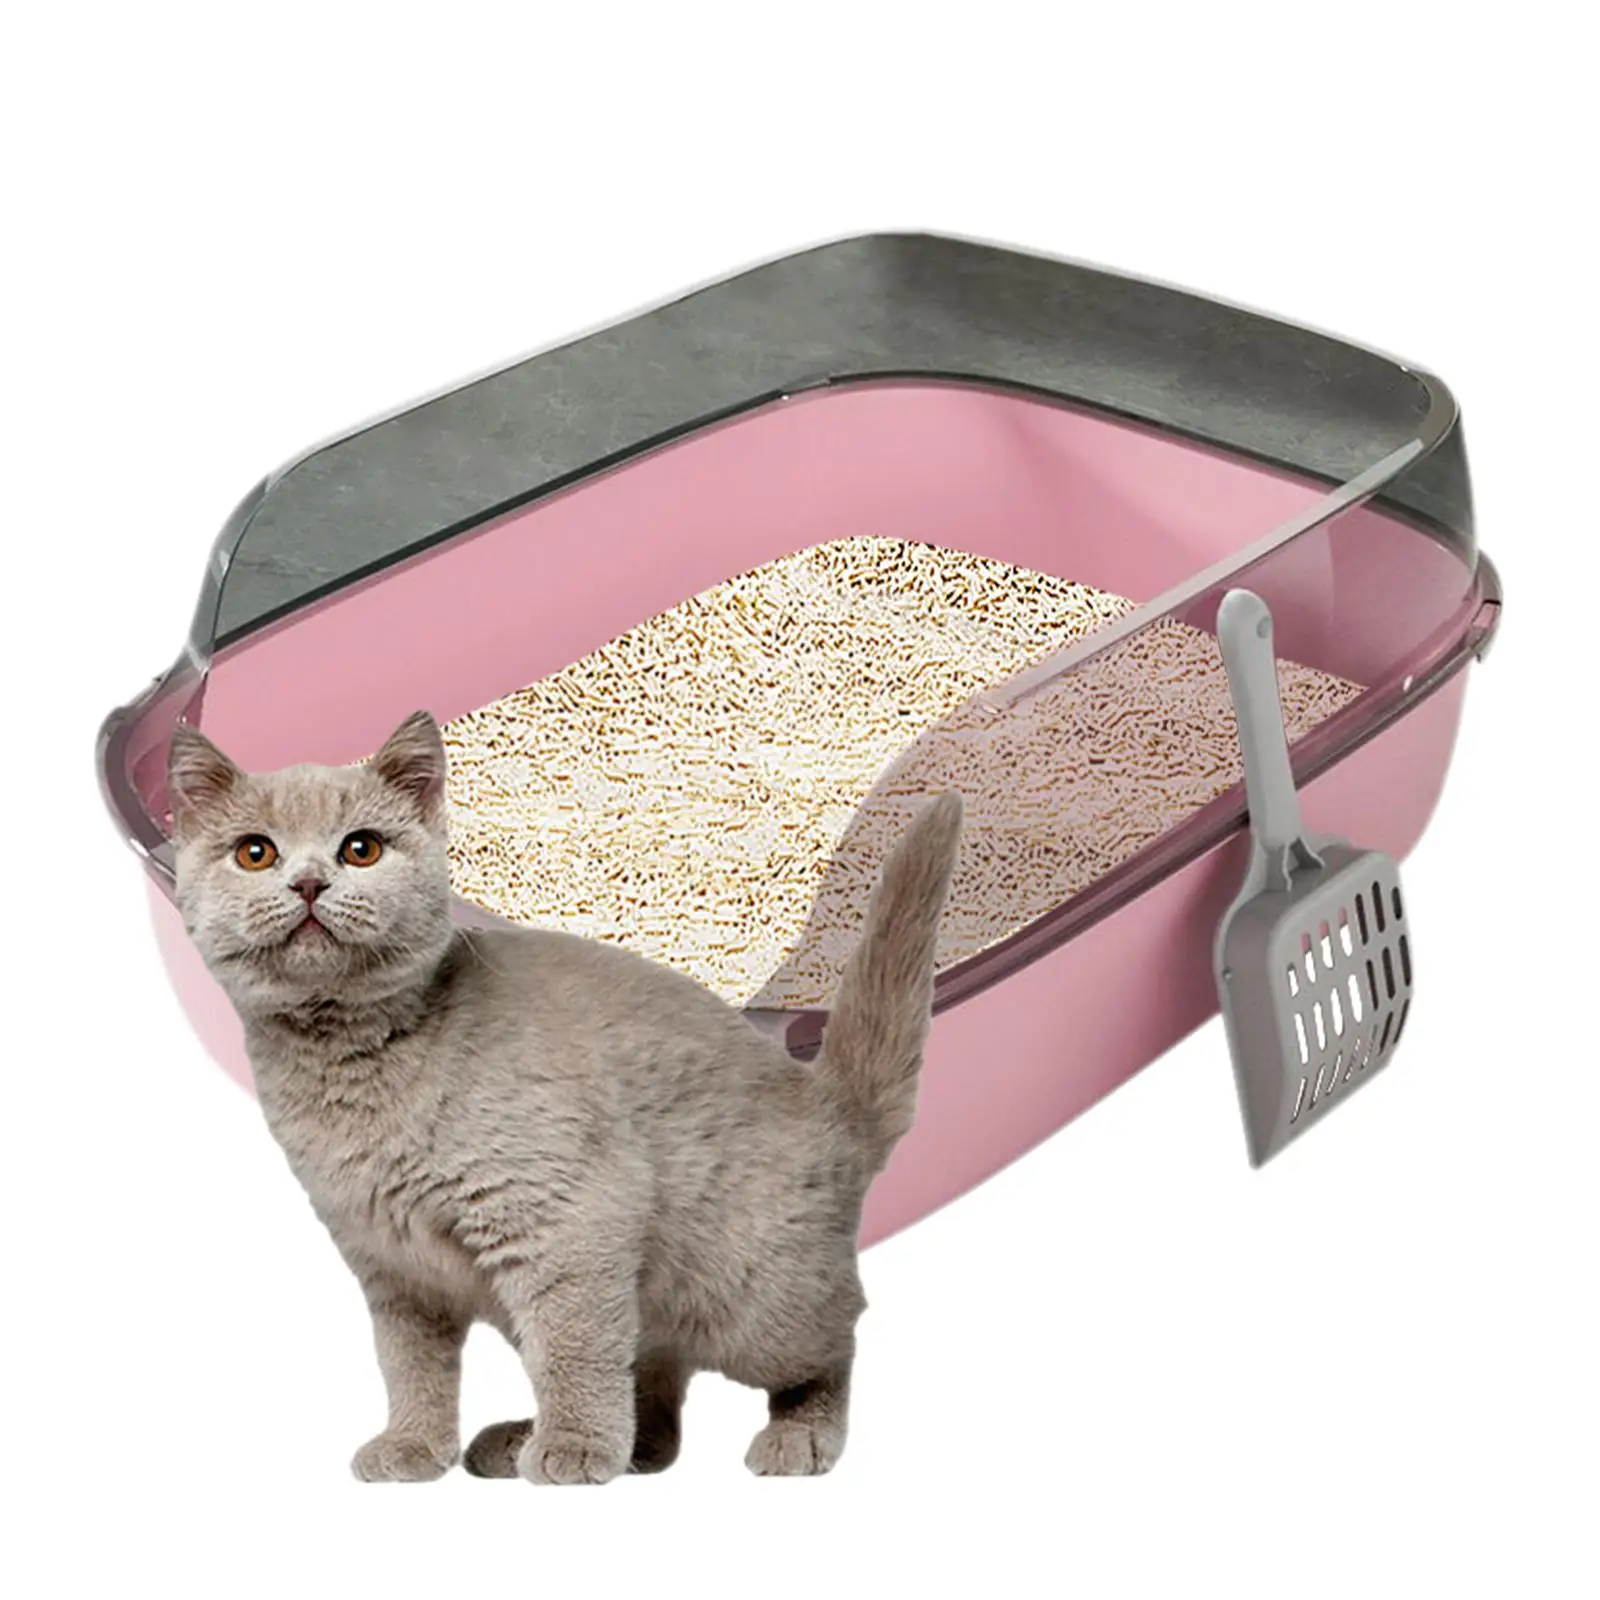 Cat Litter Box Scatter Shield Supplies Semi Enclosed Sturdy Large Anti Splash Cat Toilet Open Top Kitty Litter Pan Kitty Cat